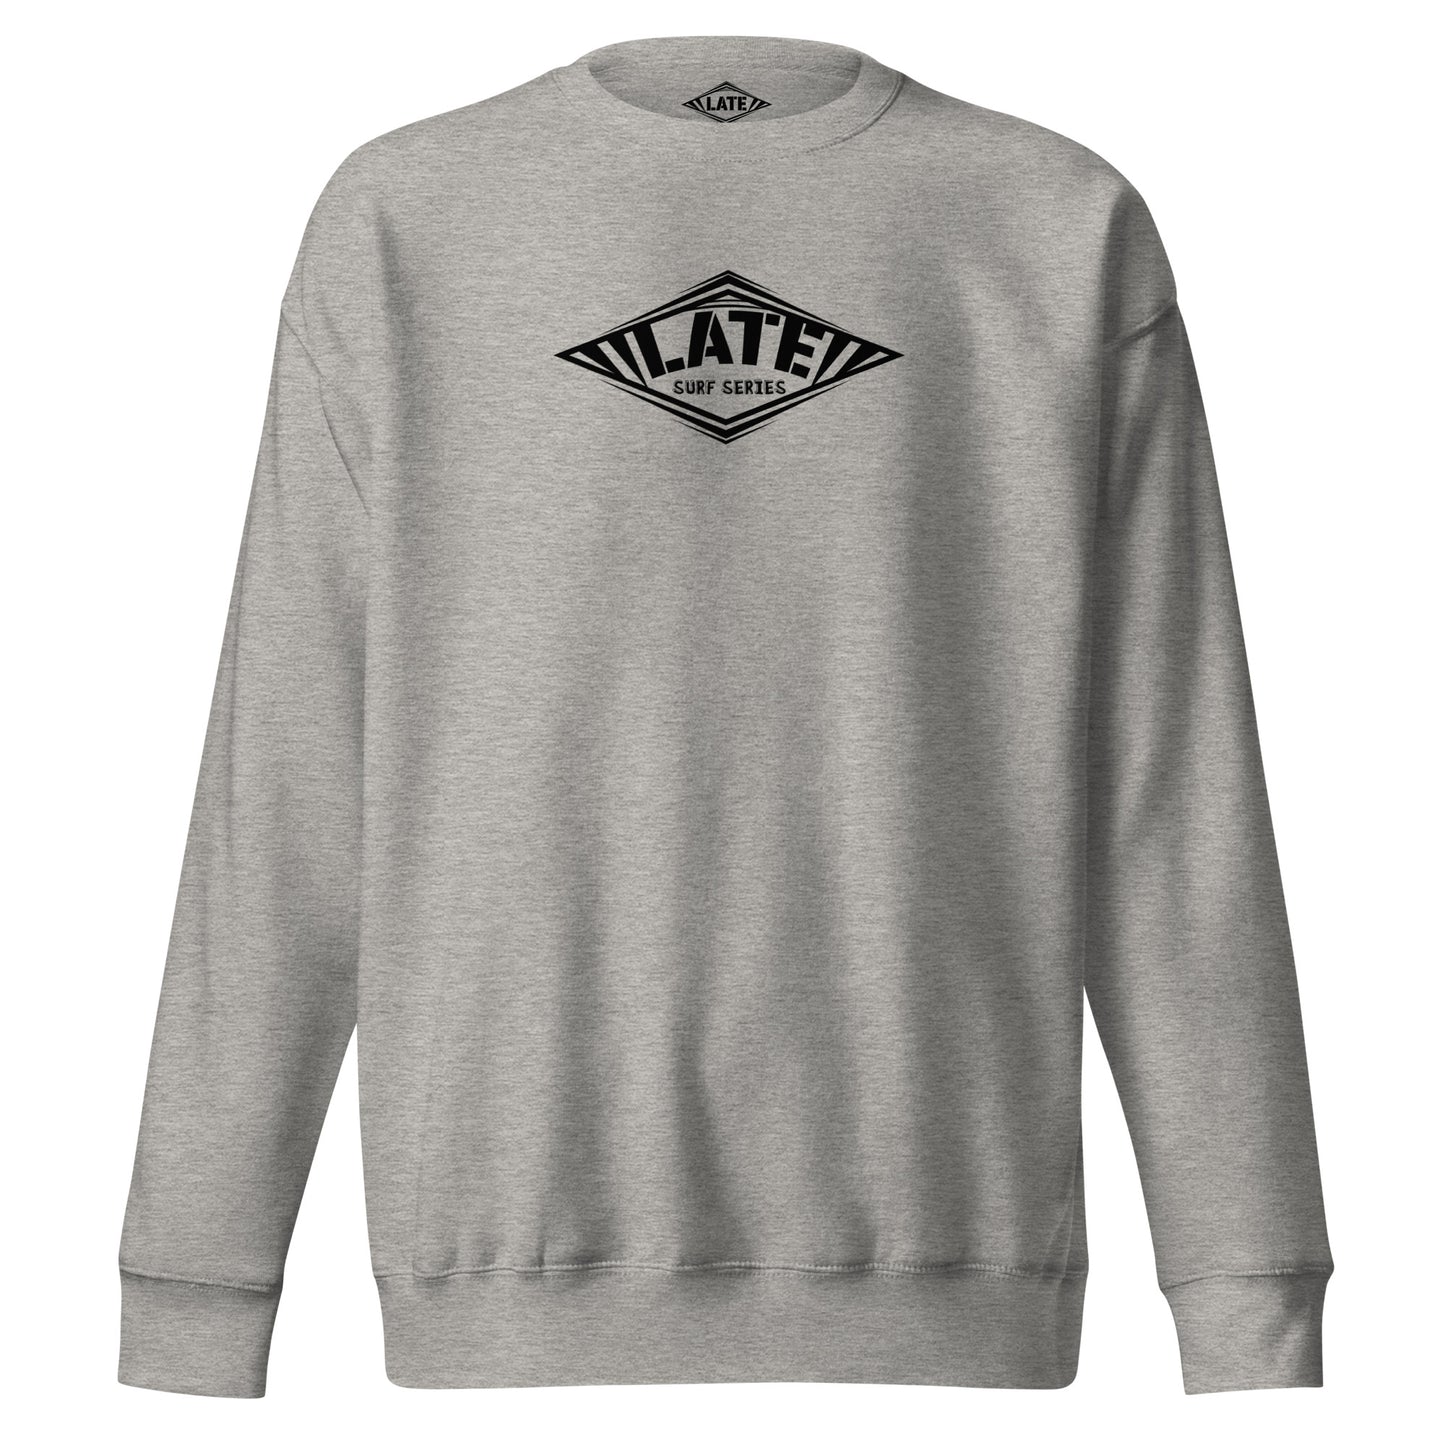 Sweatshirt Take On The Elements surf series logo Late sweat unisex gris